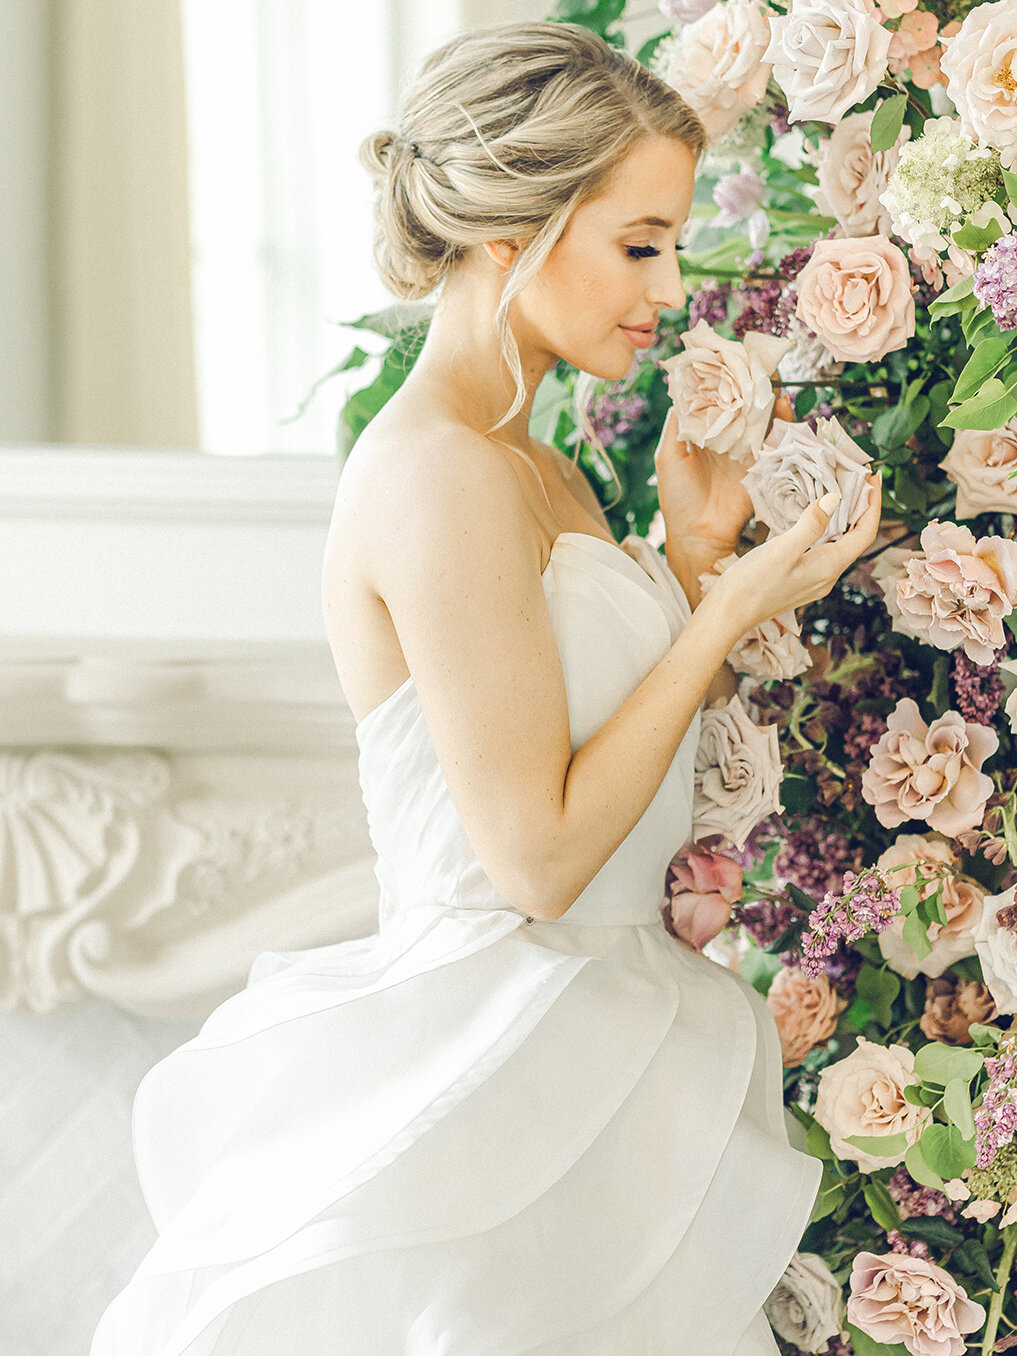  Romantic Texas Hillside Estate styled shoot in Katherine Tash Nova and Valentina wedding dresses 